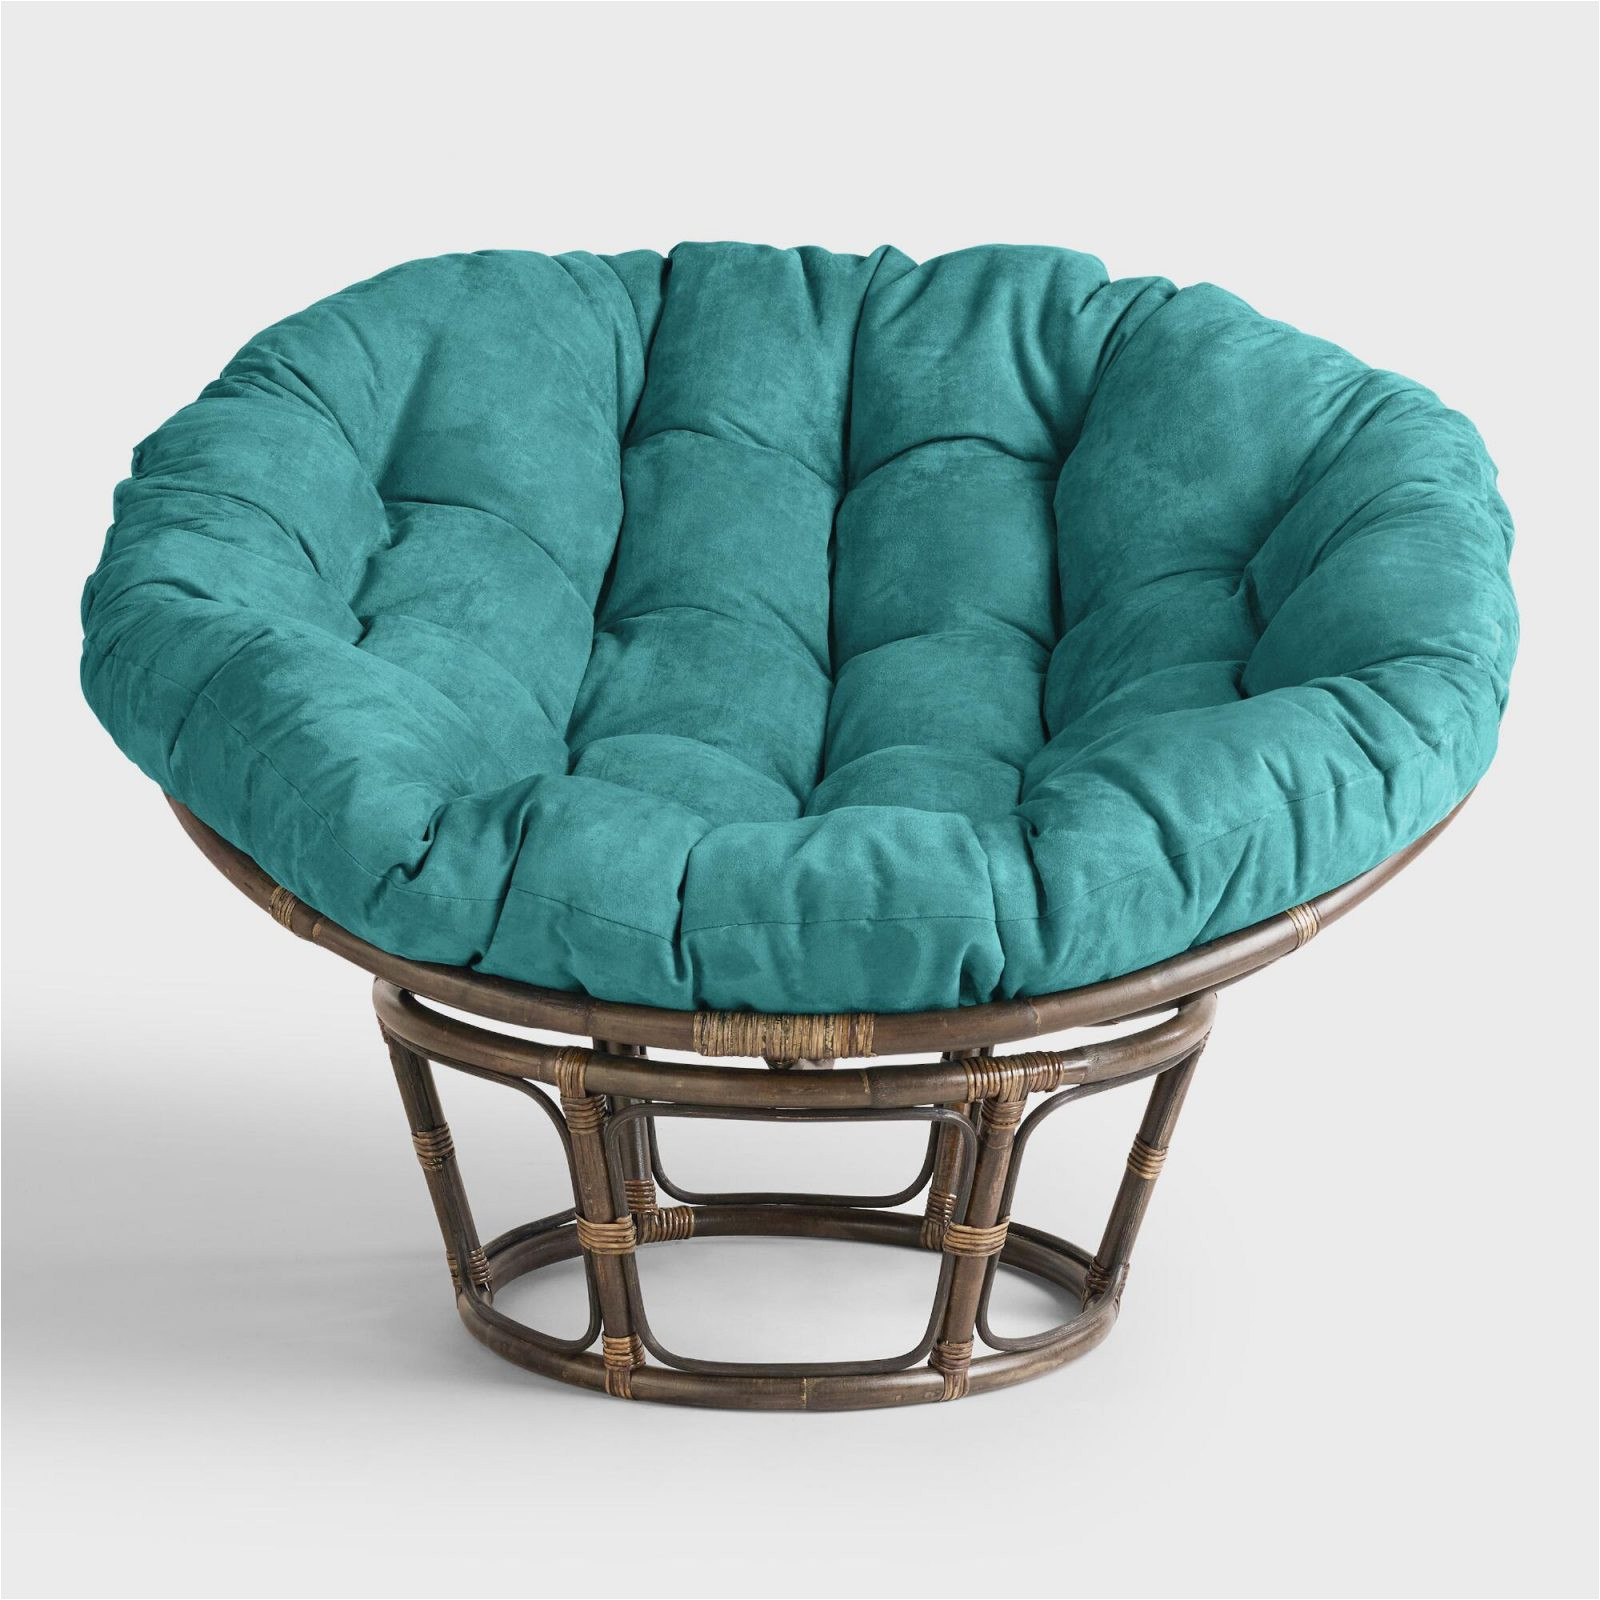 porcelain micro suede papasan chair cushion world market amazon 20800 x ikea pier one cover 1600